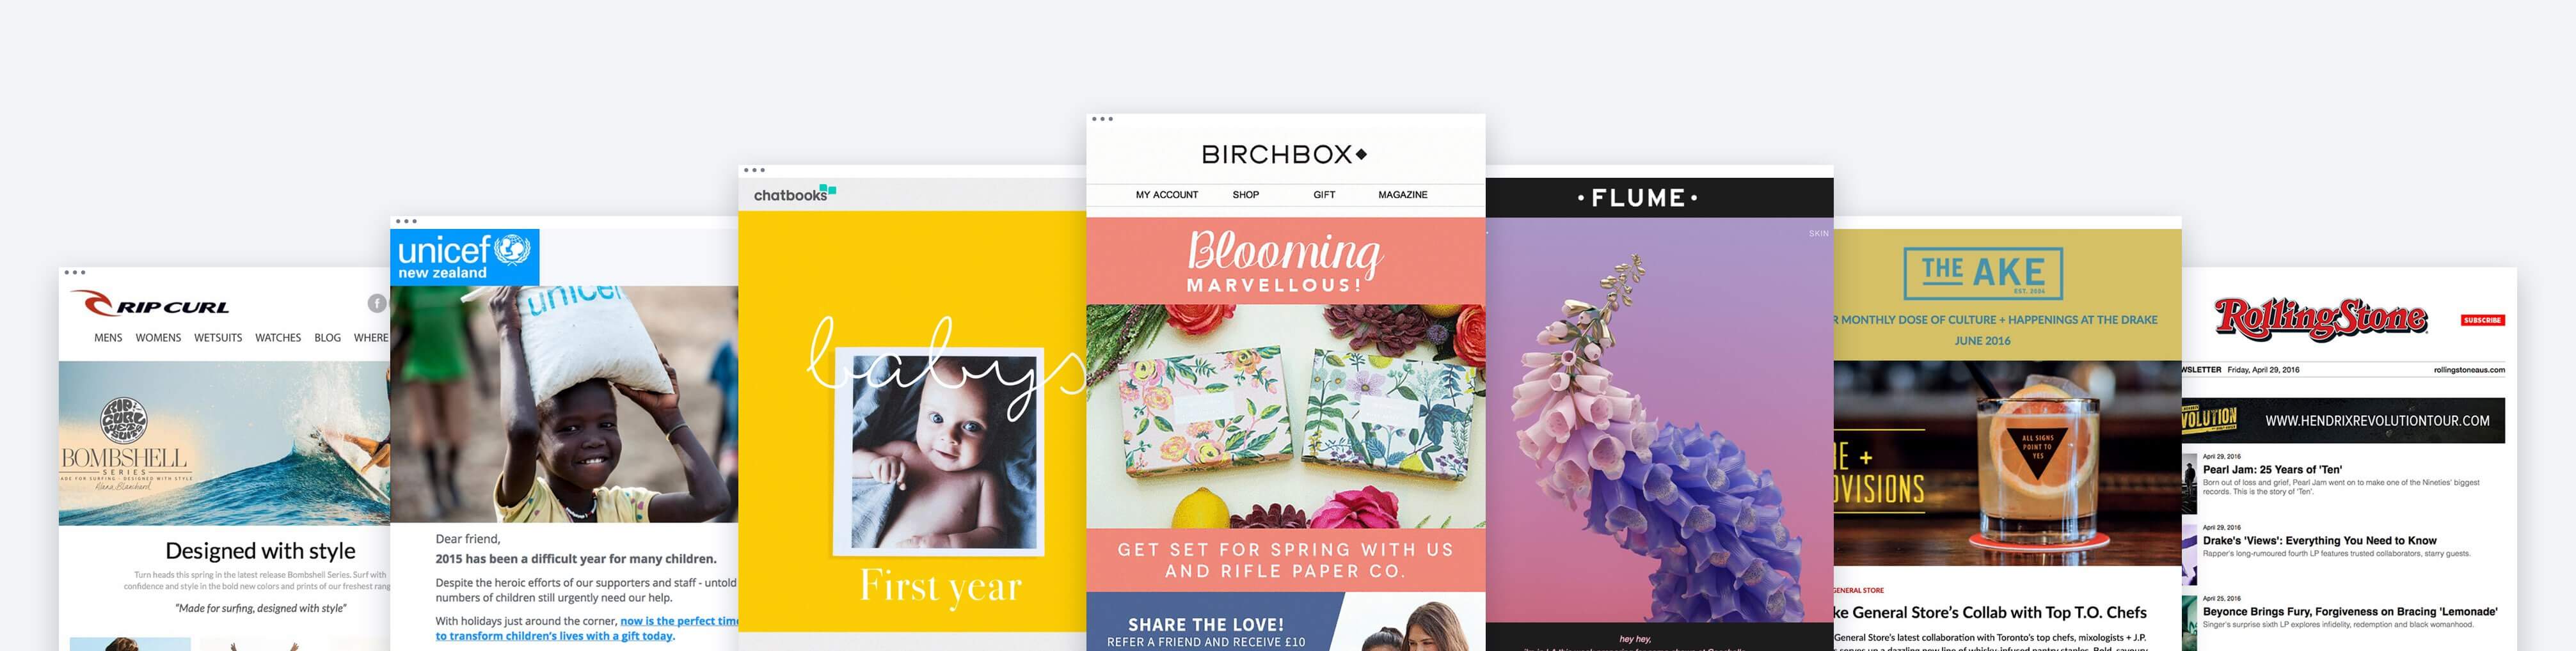 Email marketing examples - Birchbox, Flume, Chatbooks.